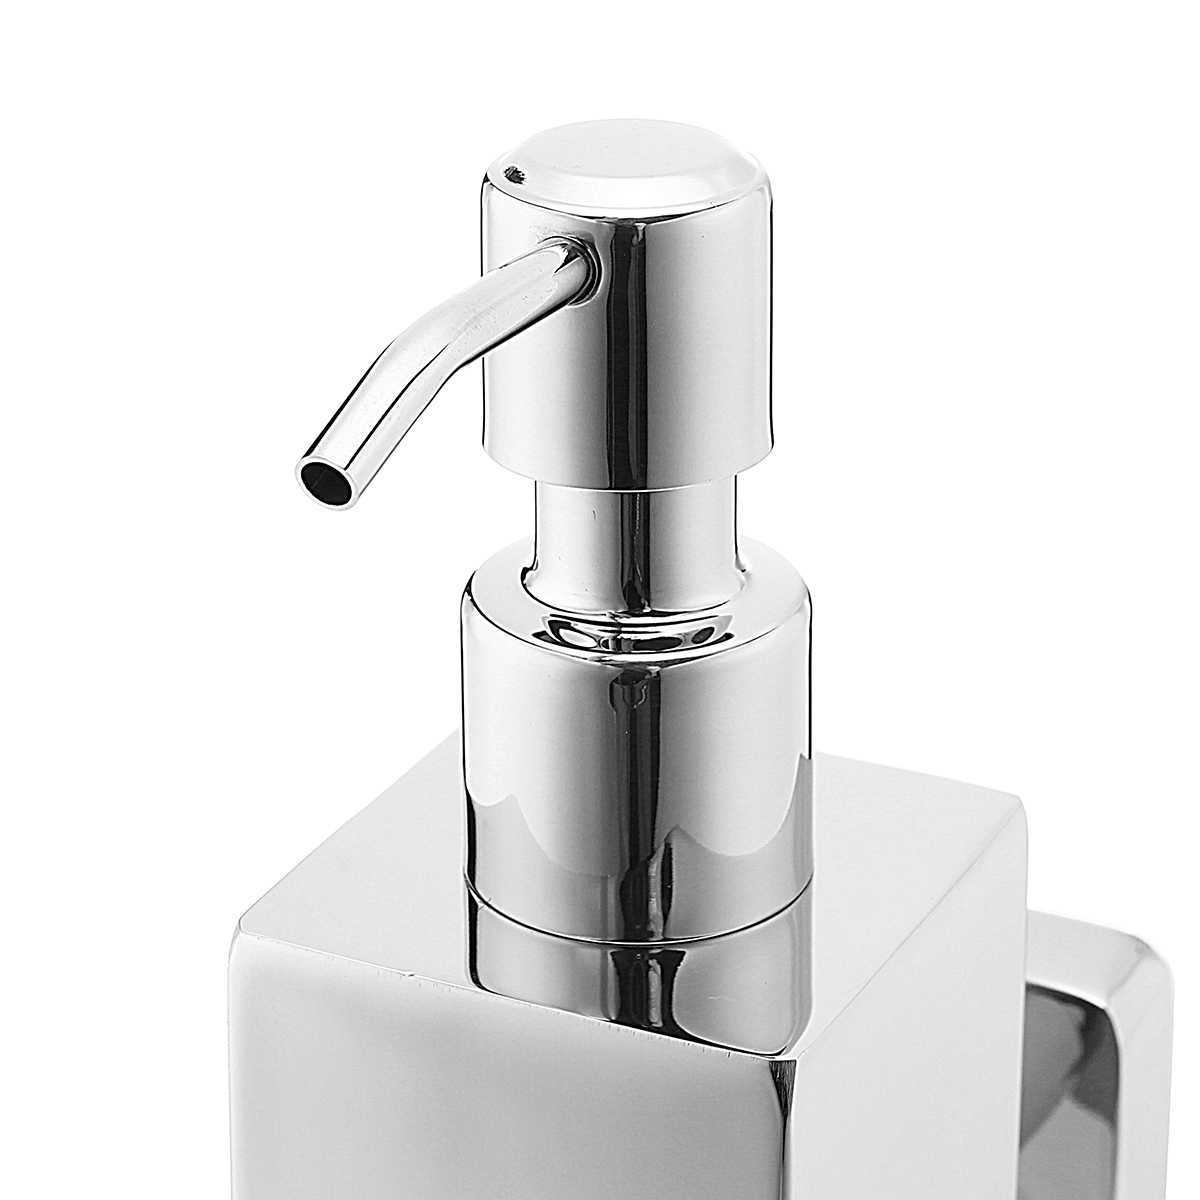 Stainless-Steel-Hand-Soap-Dispenser-Liquid-Bottle-Holder-Wall-Mounted-Bathroom-Storage-1427272-8